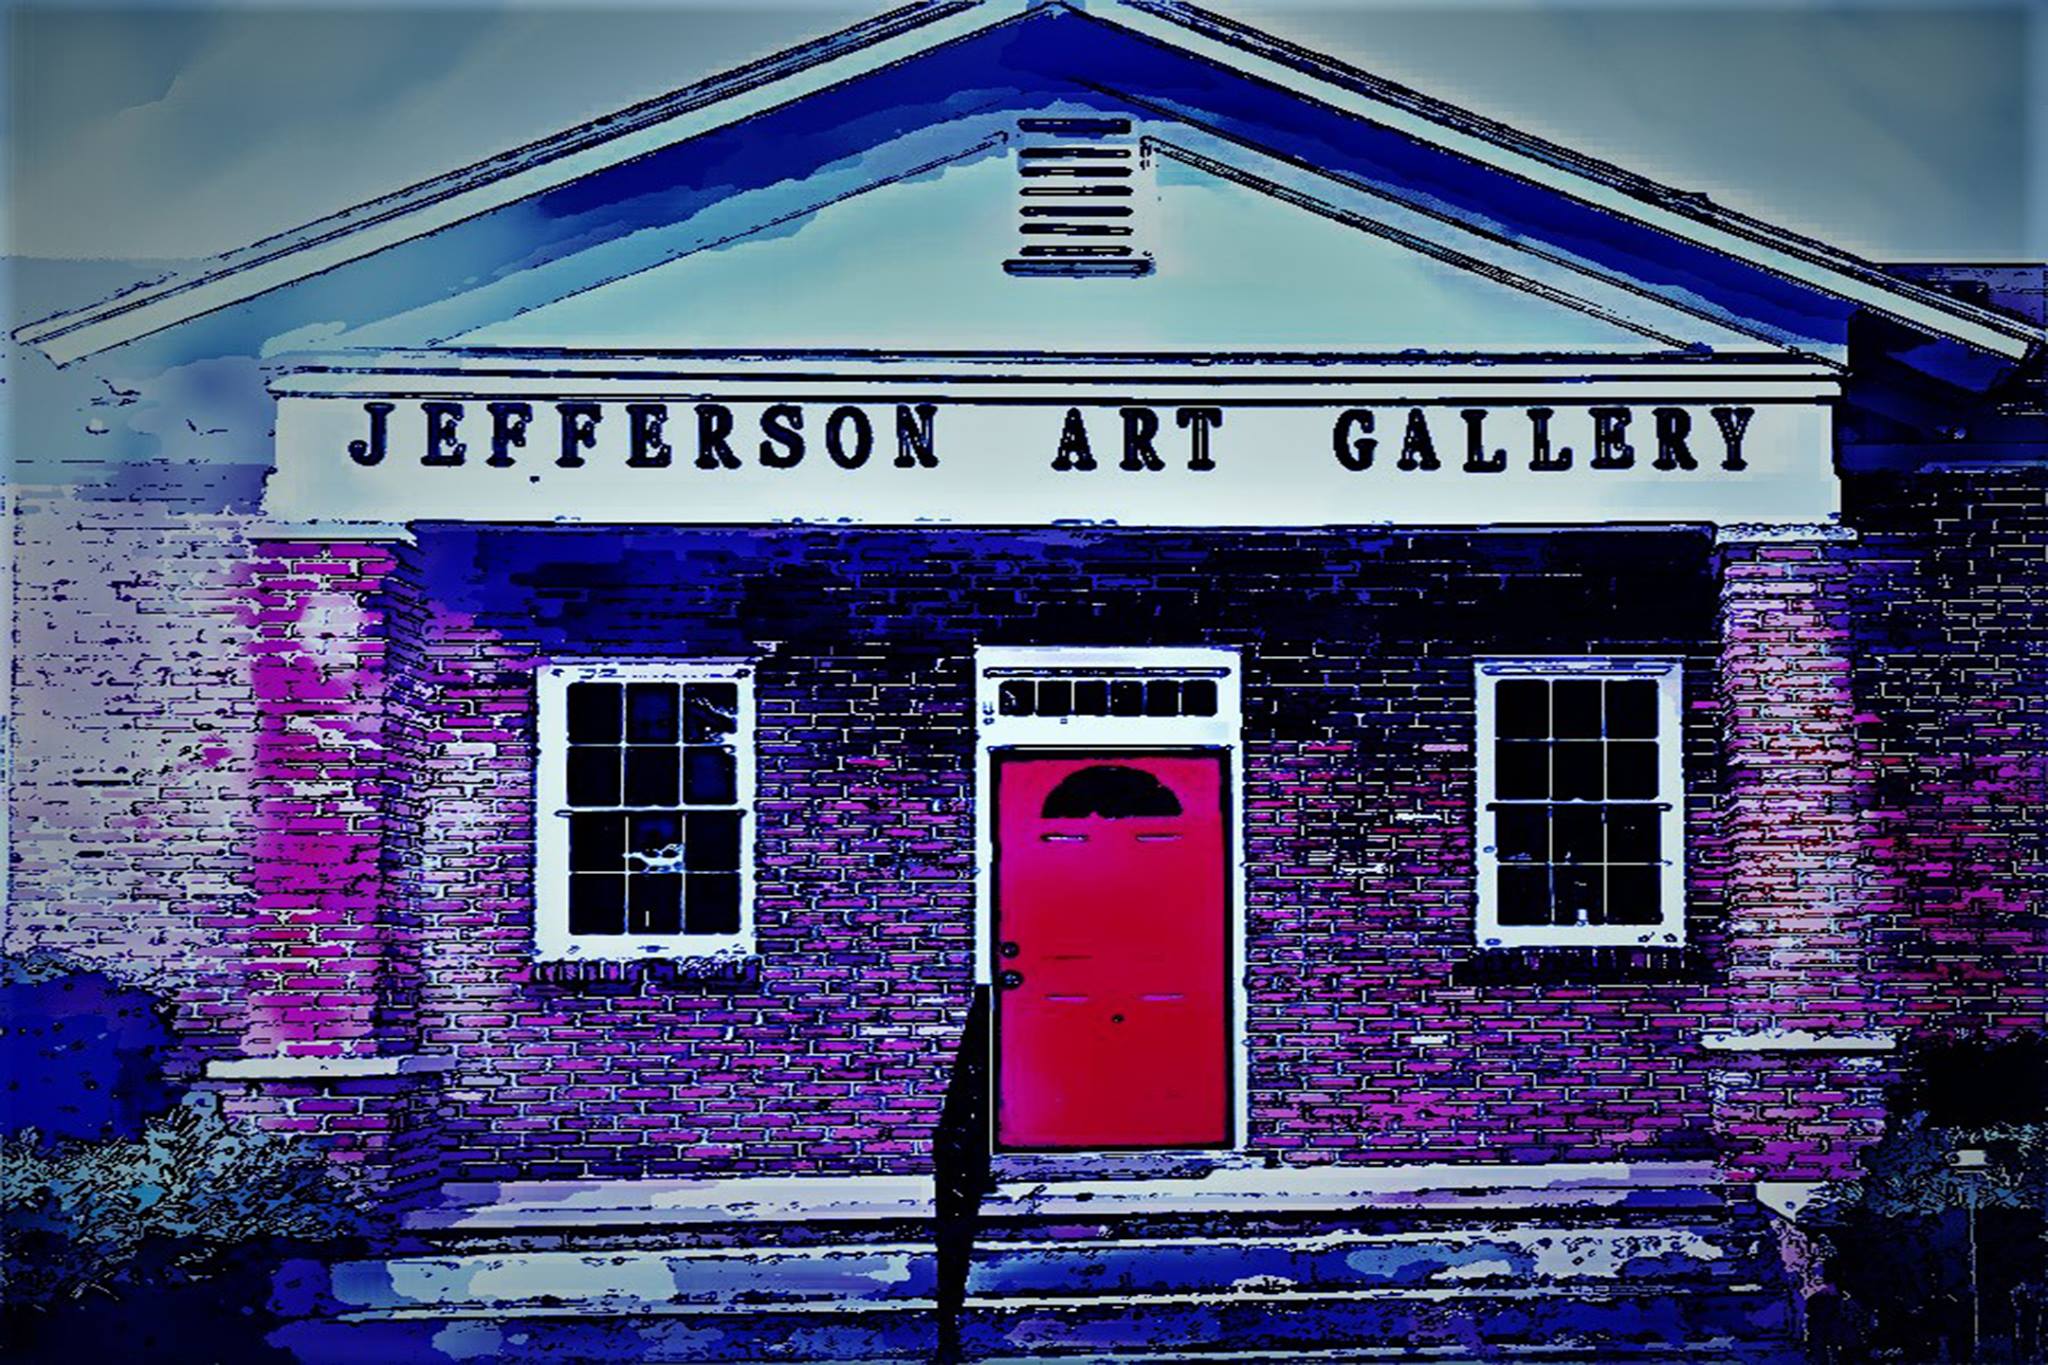 Jefferson Arts Gallery